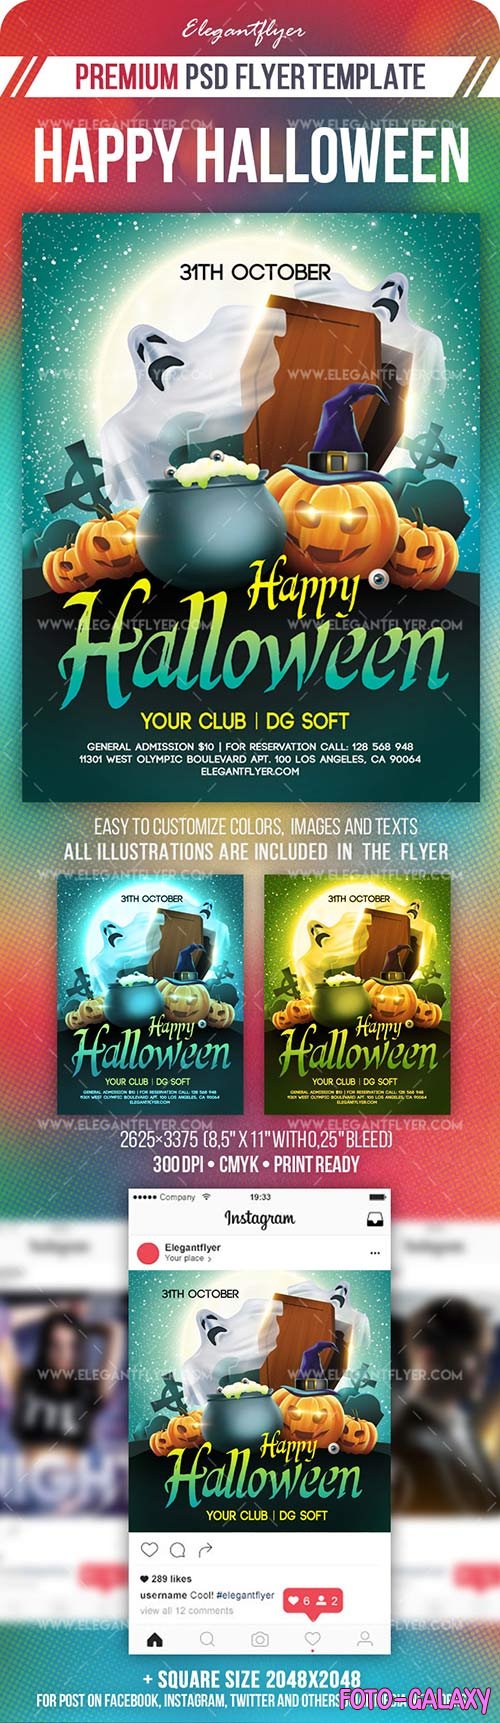 Happy Halloween Flyer PSD Template vol 5